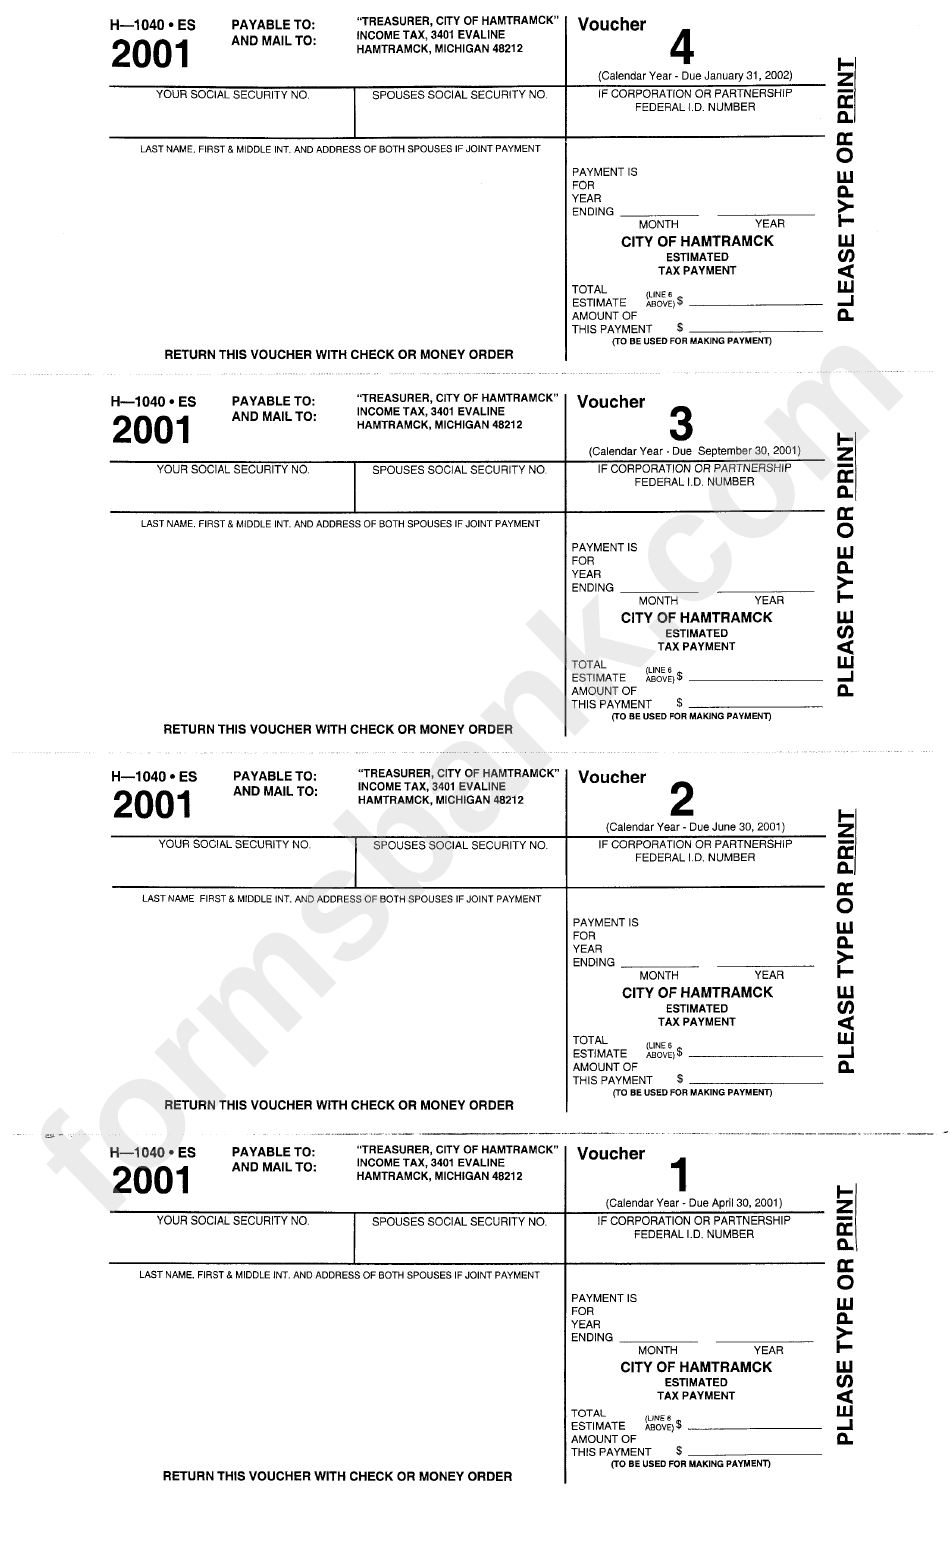 Form H-1040 Es - City Of Hamtramck Estimated Tax Payment Voucher - 2001